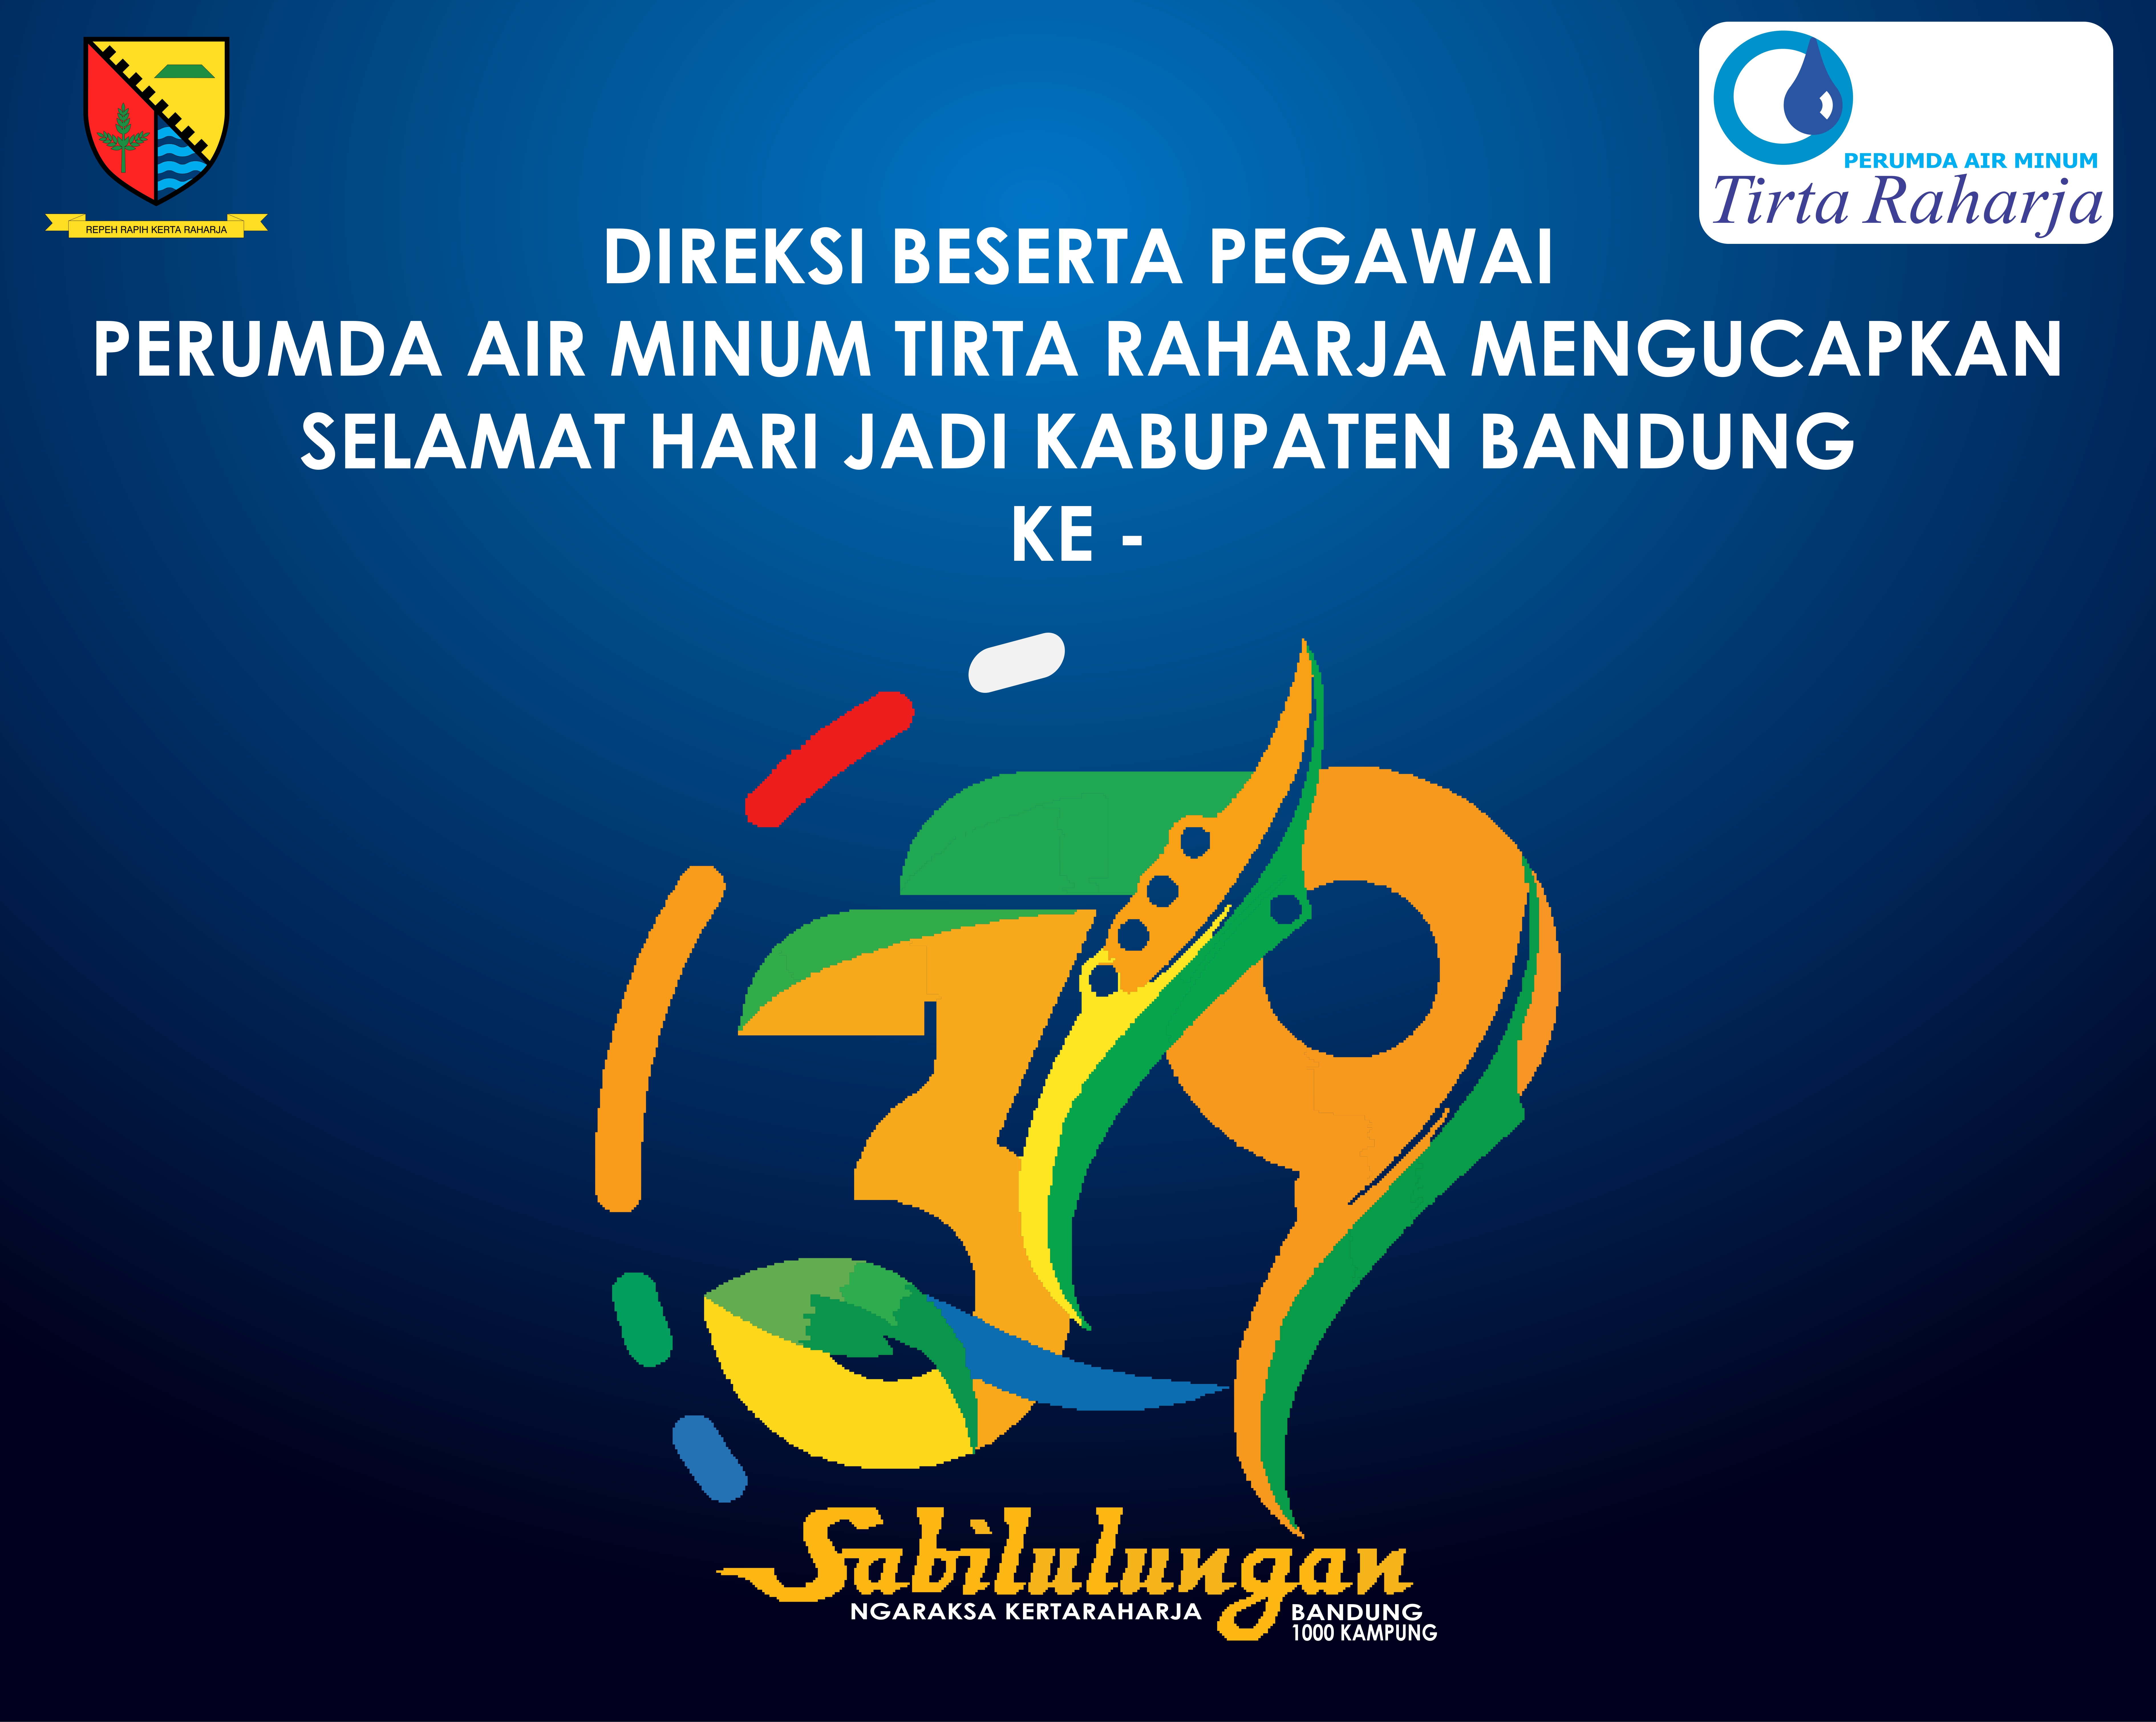 Selamat Hari Jadi Kabupaten Bandung ke 379 tahun 2020 ...